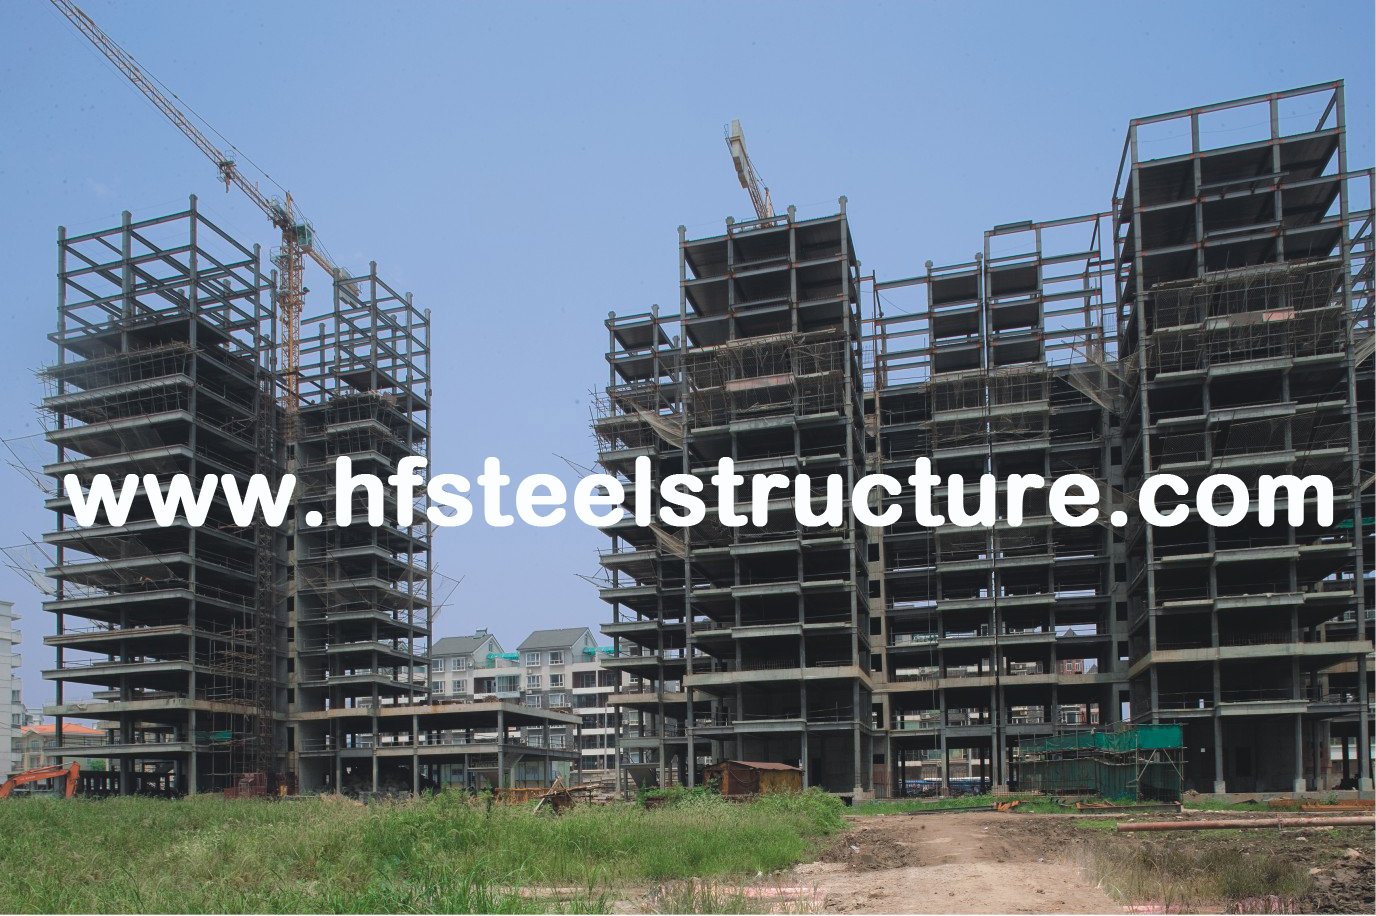 Modern Heavy Industrial Commercial Steel Buildings Natatorium in Gymnasium